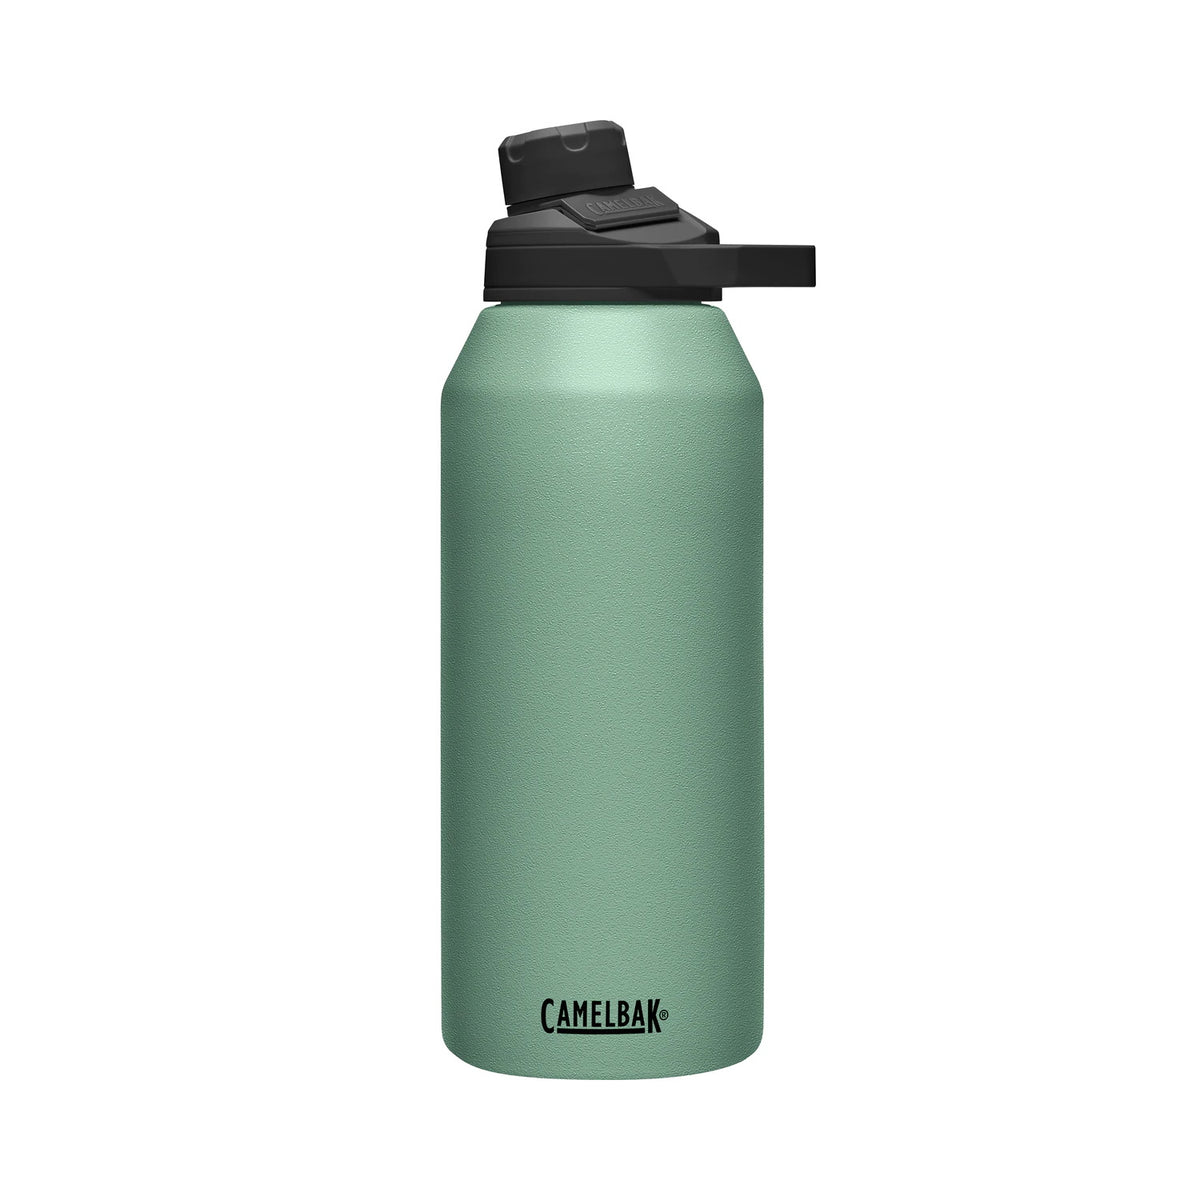 Camelbak Chute Mag Vacuum Bottle 1.2L in Moss